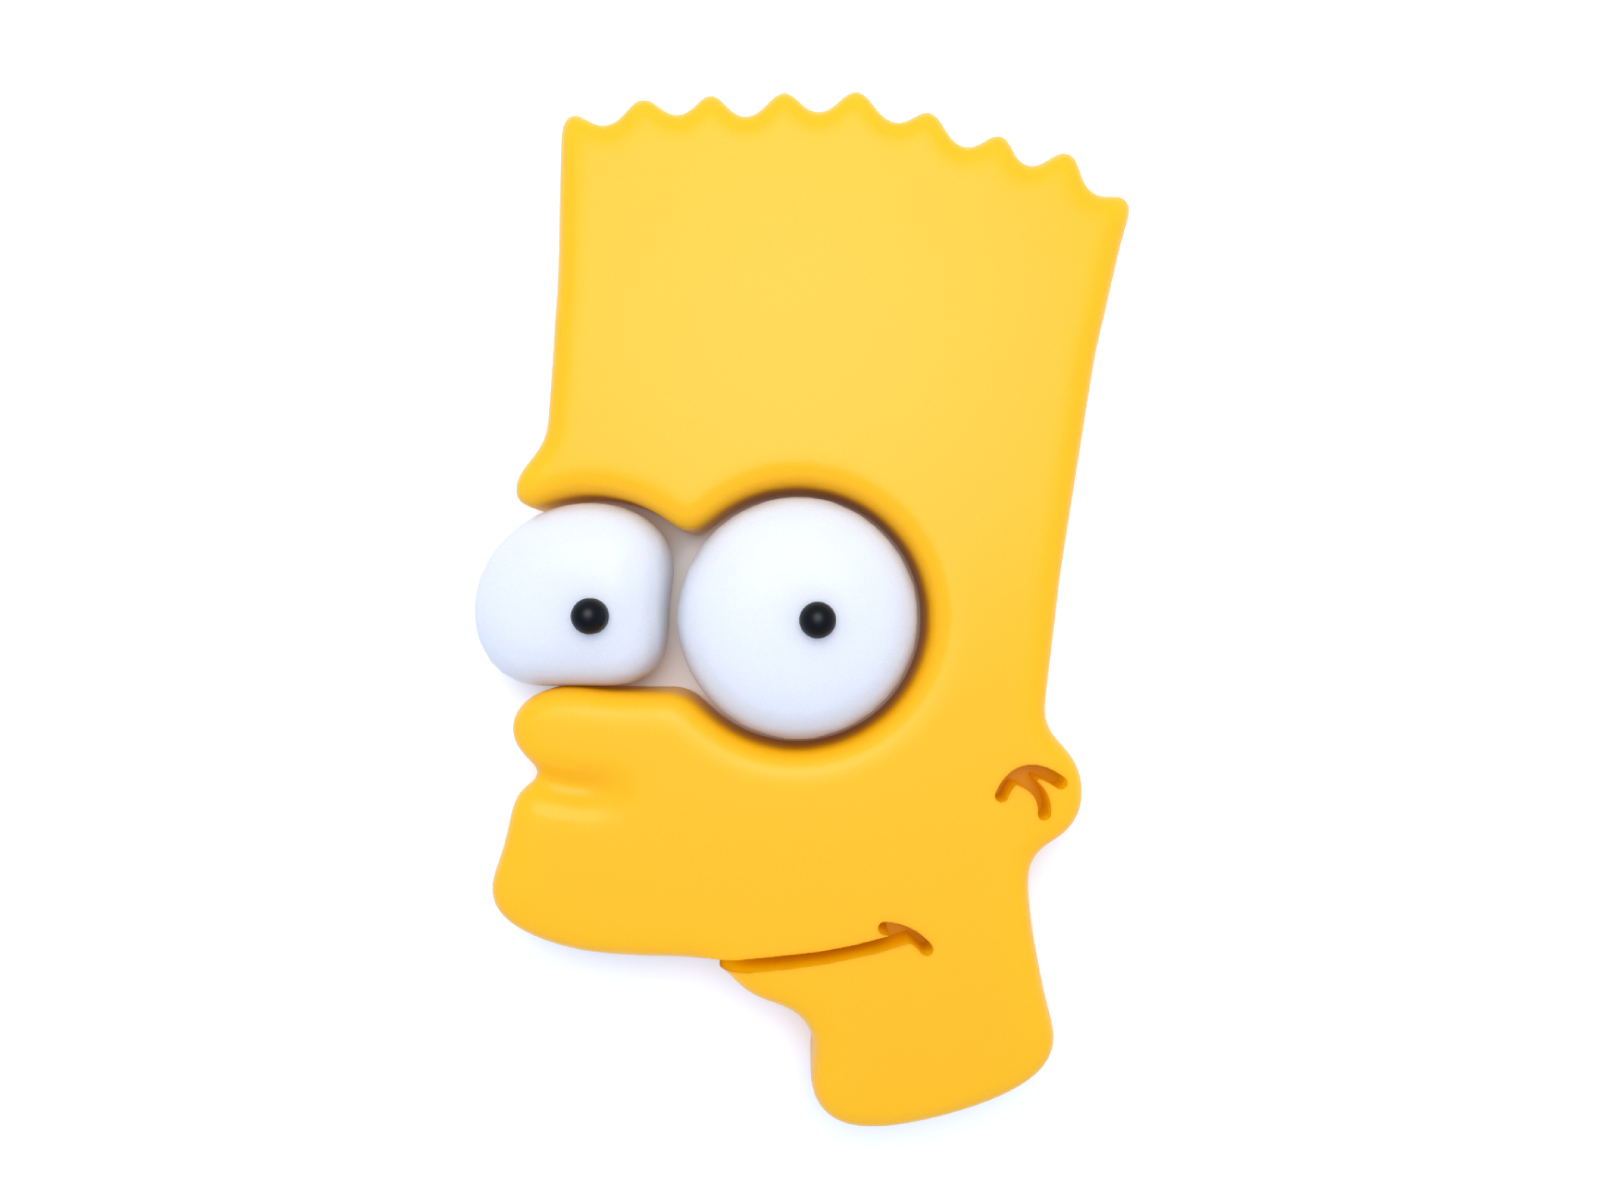 Bart Simpson by Andrew Kliatskyi on Dribbble